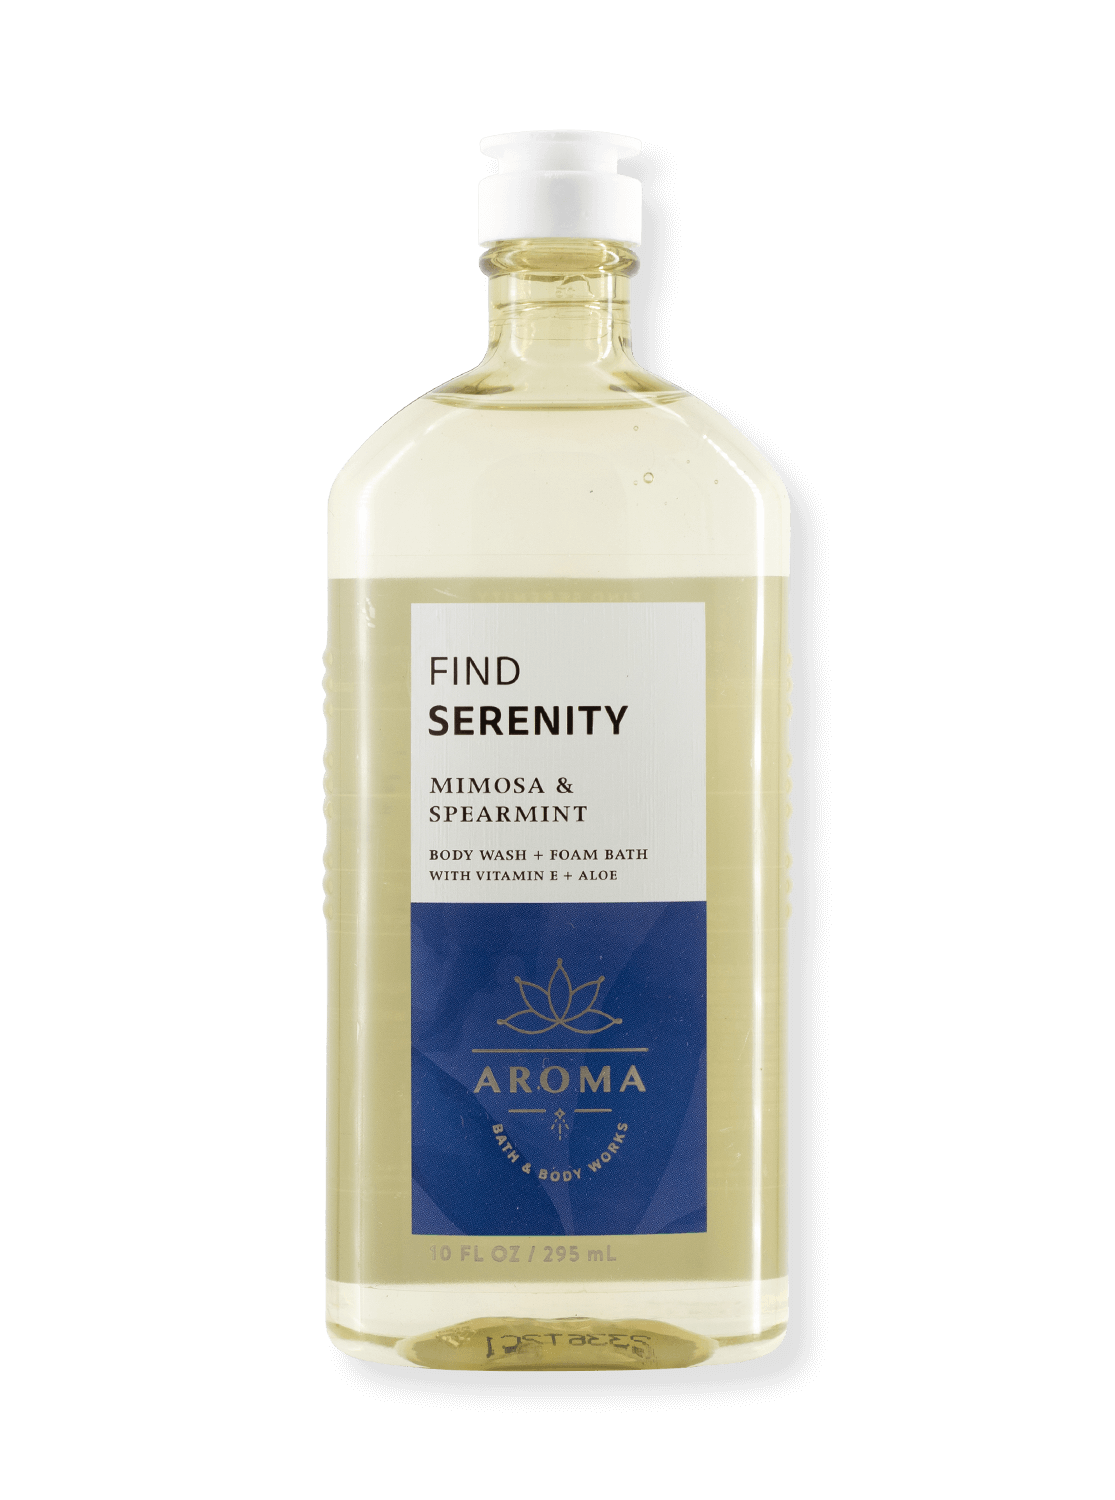 Duschgel & Schaumbad - AROMA - Find Serentity - Mimosa & Spearmint - 295ml